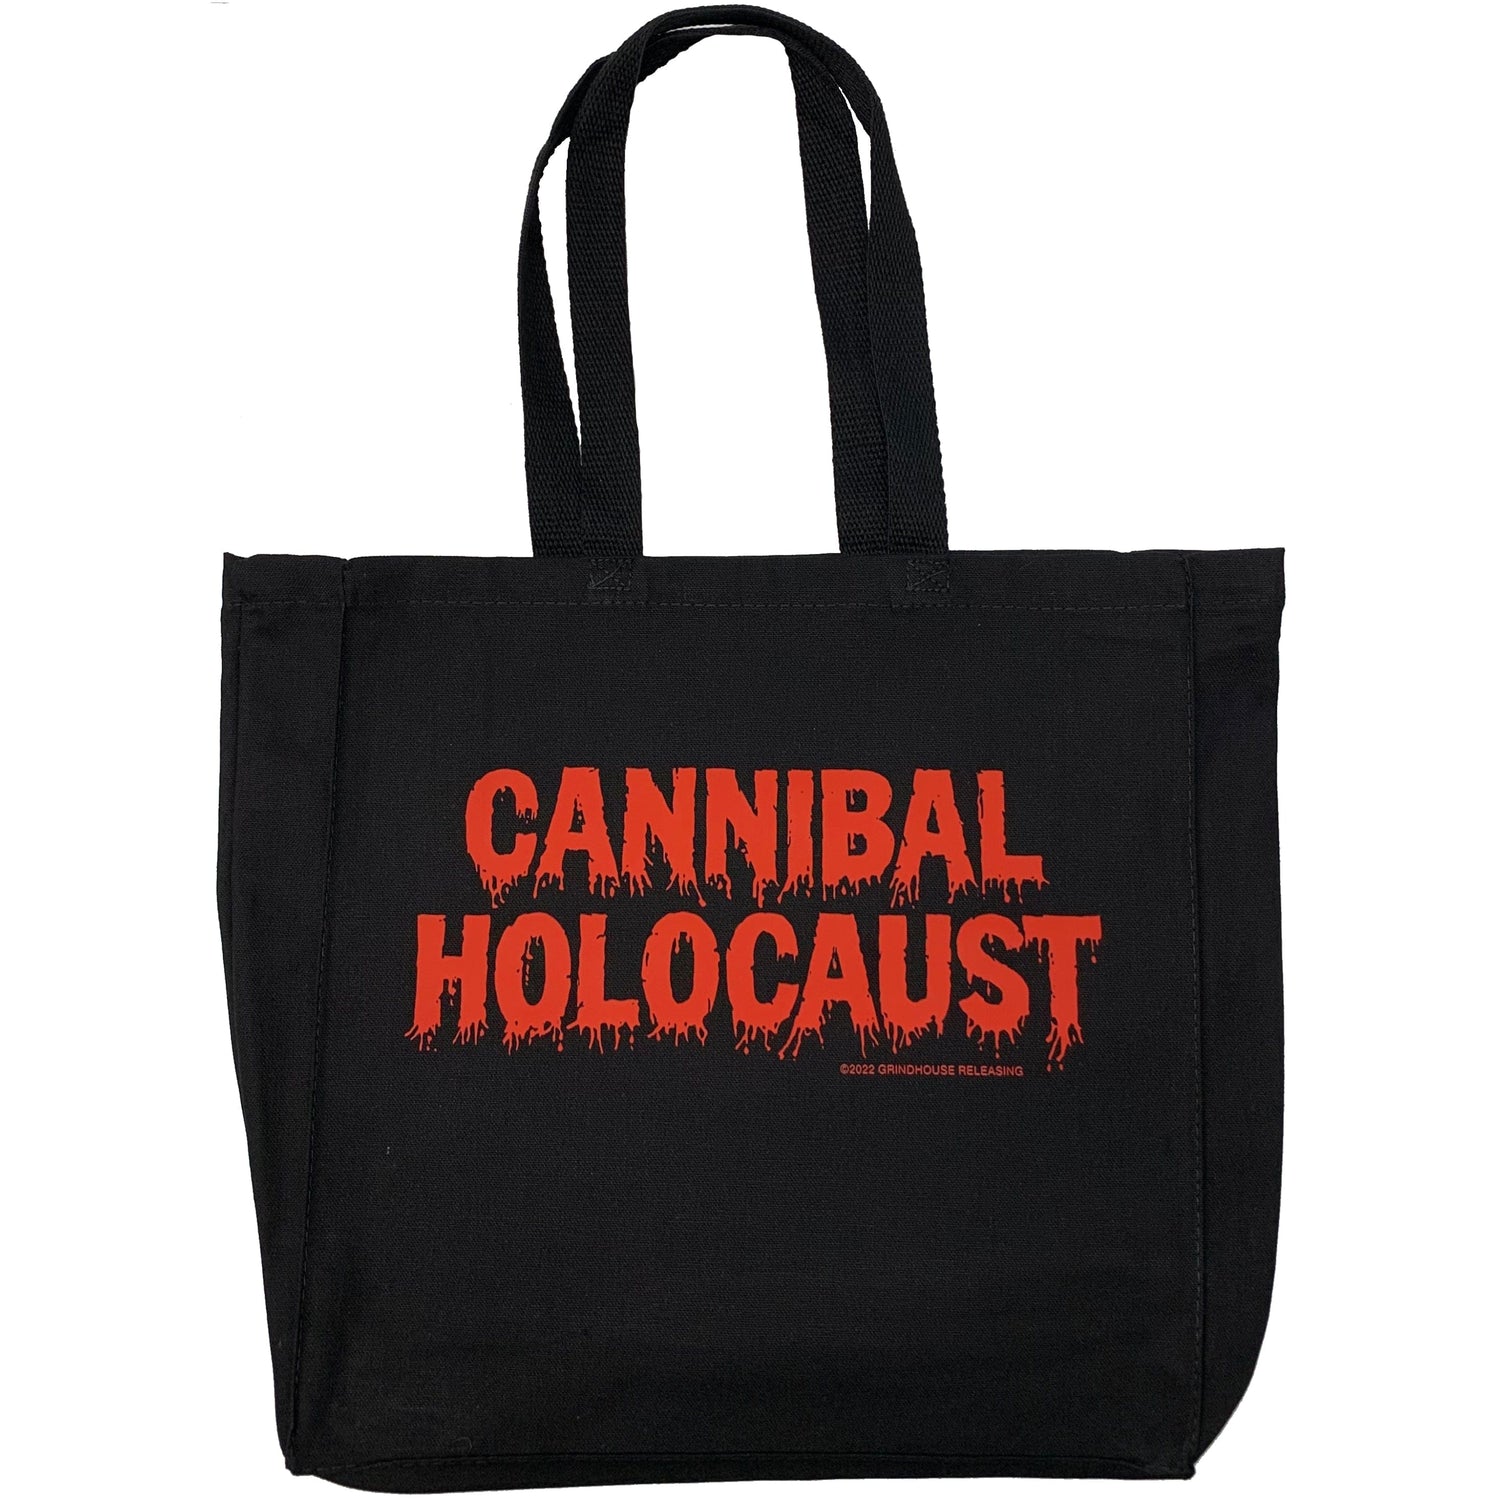 CANNIBAL HOLOCAUST Tote Bag